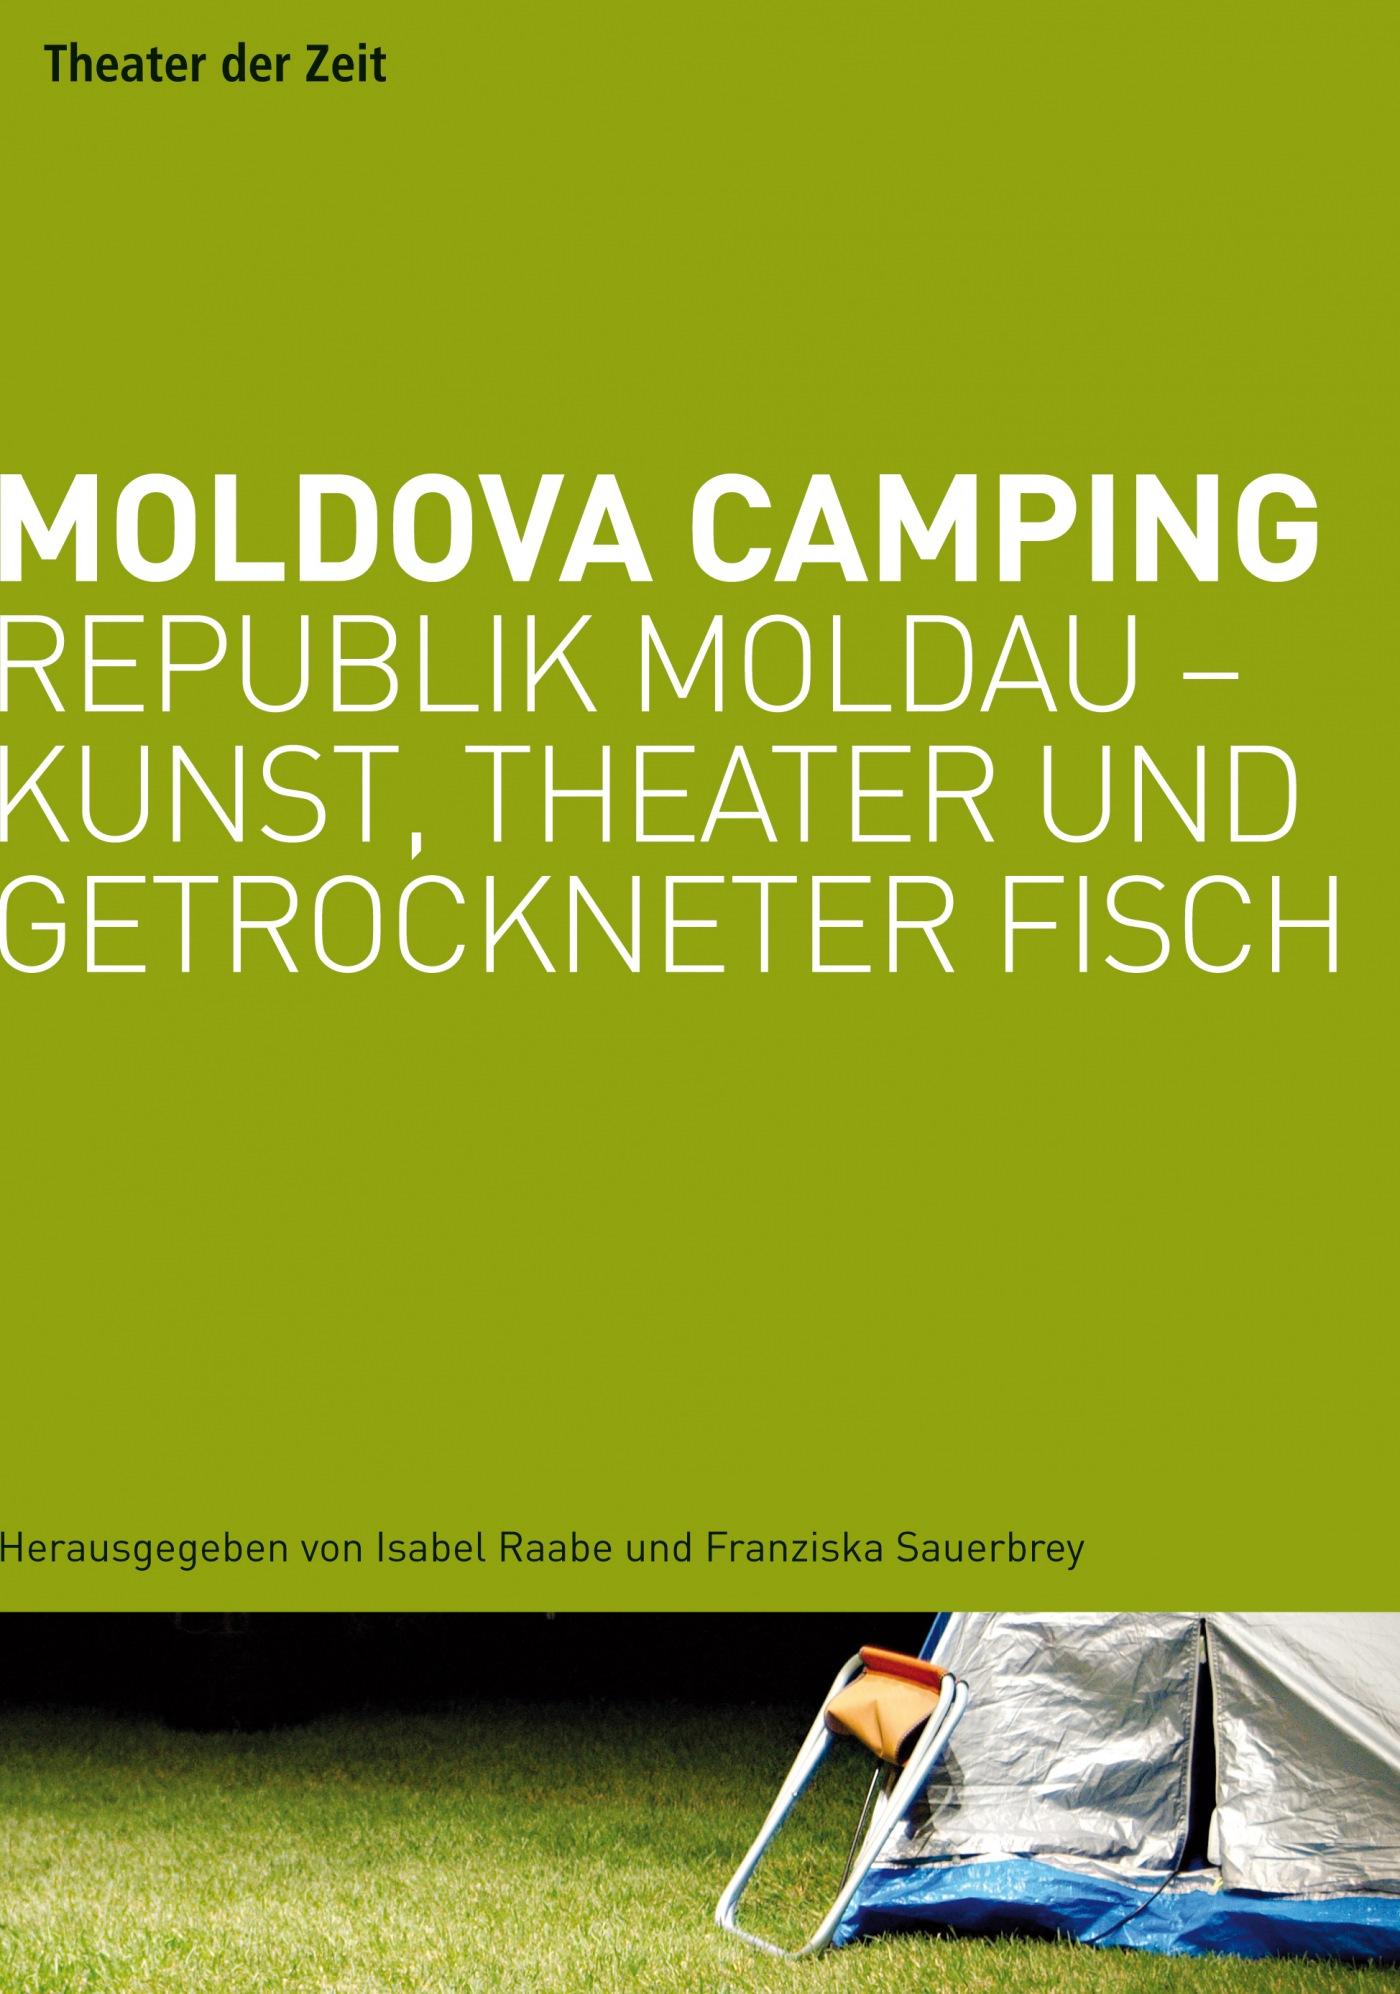 "Moldova Camping"